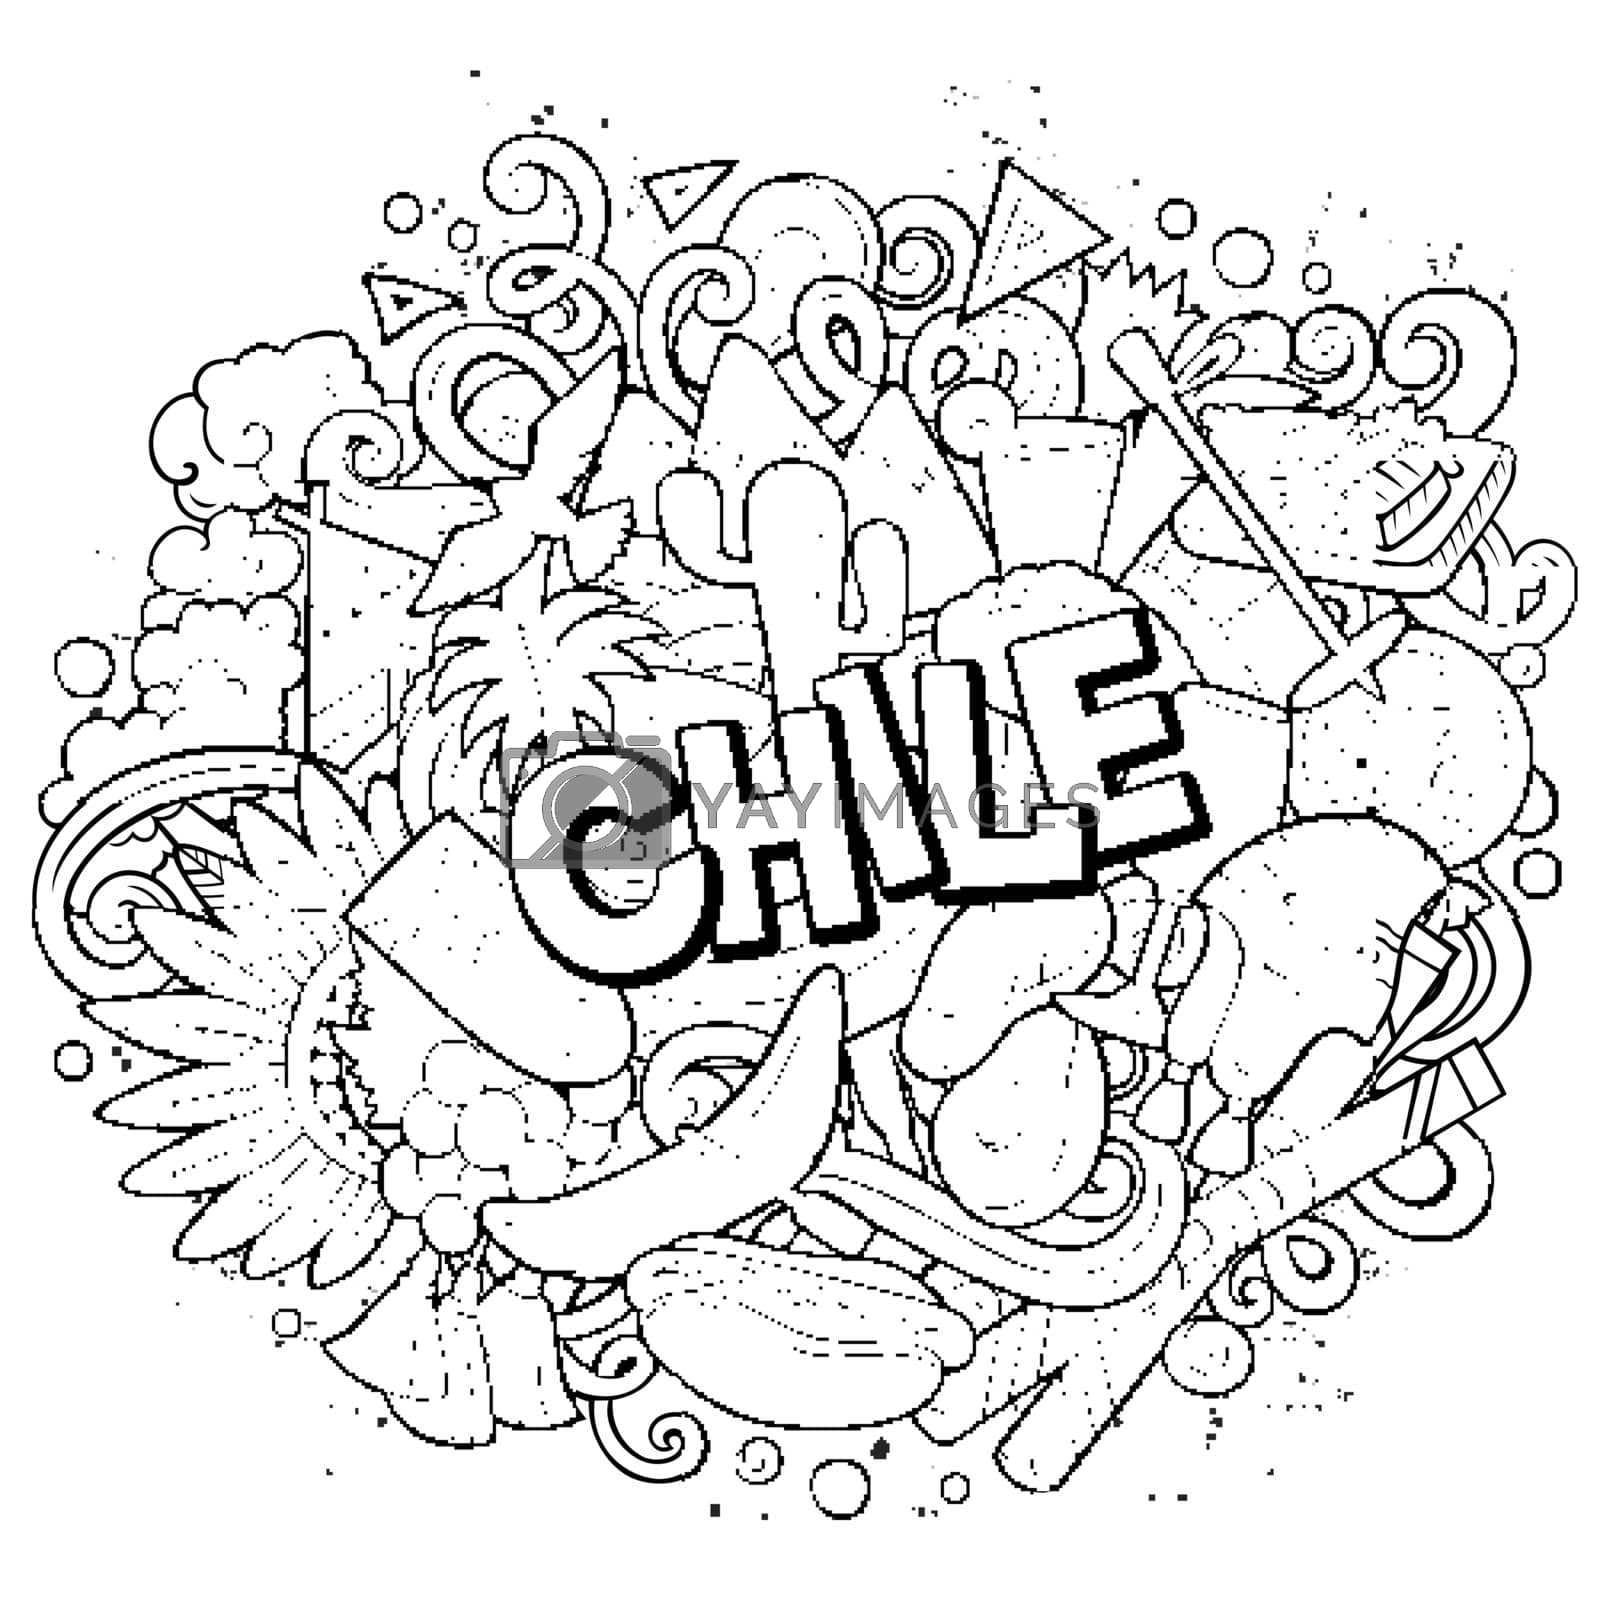 Royalty free image of Chile hand drawn cartoon doodles illustration. Funny design. by balabolka